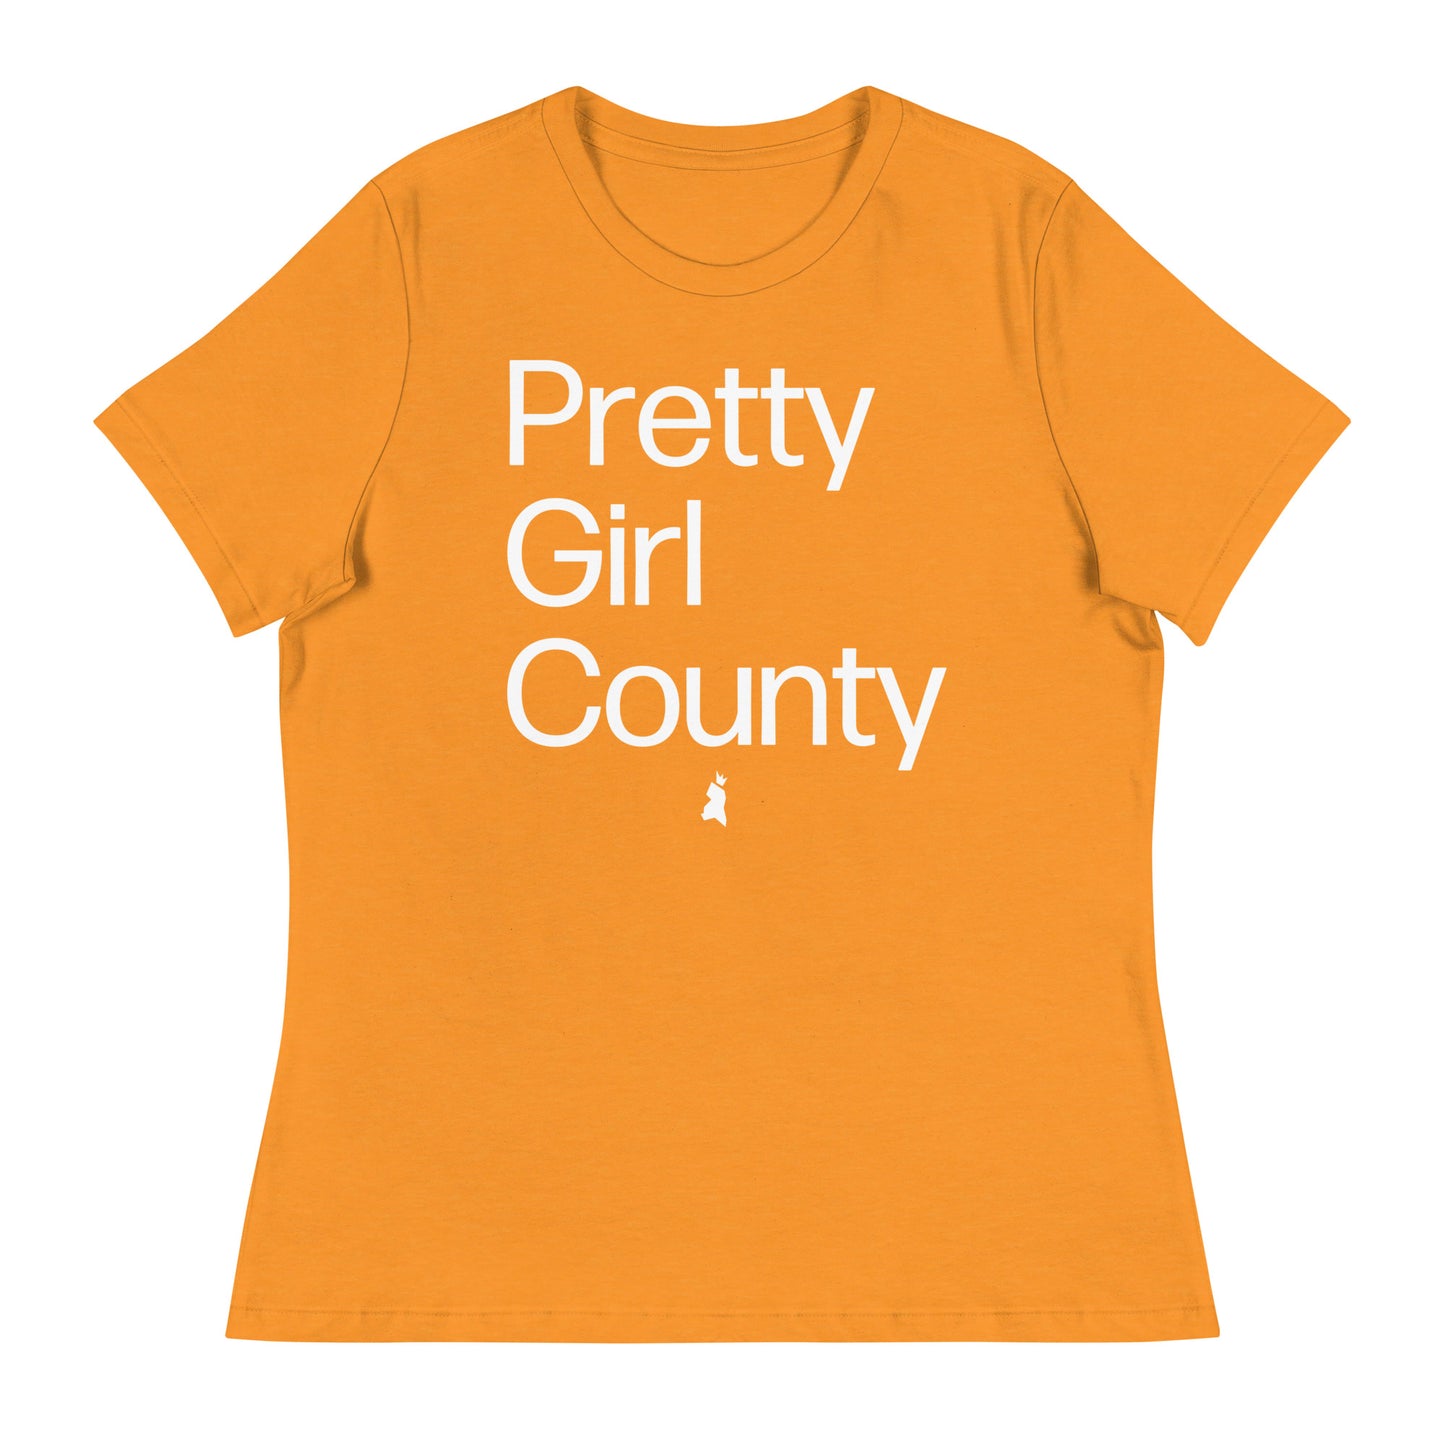 Pretty Girl County Women's Crew Neck Tee